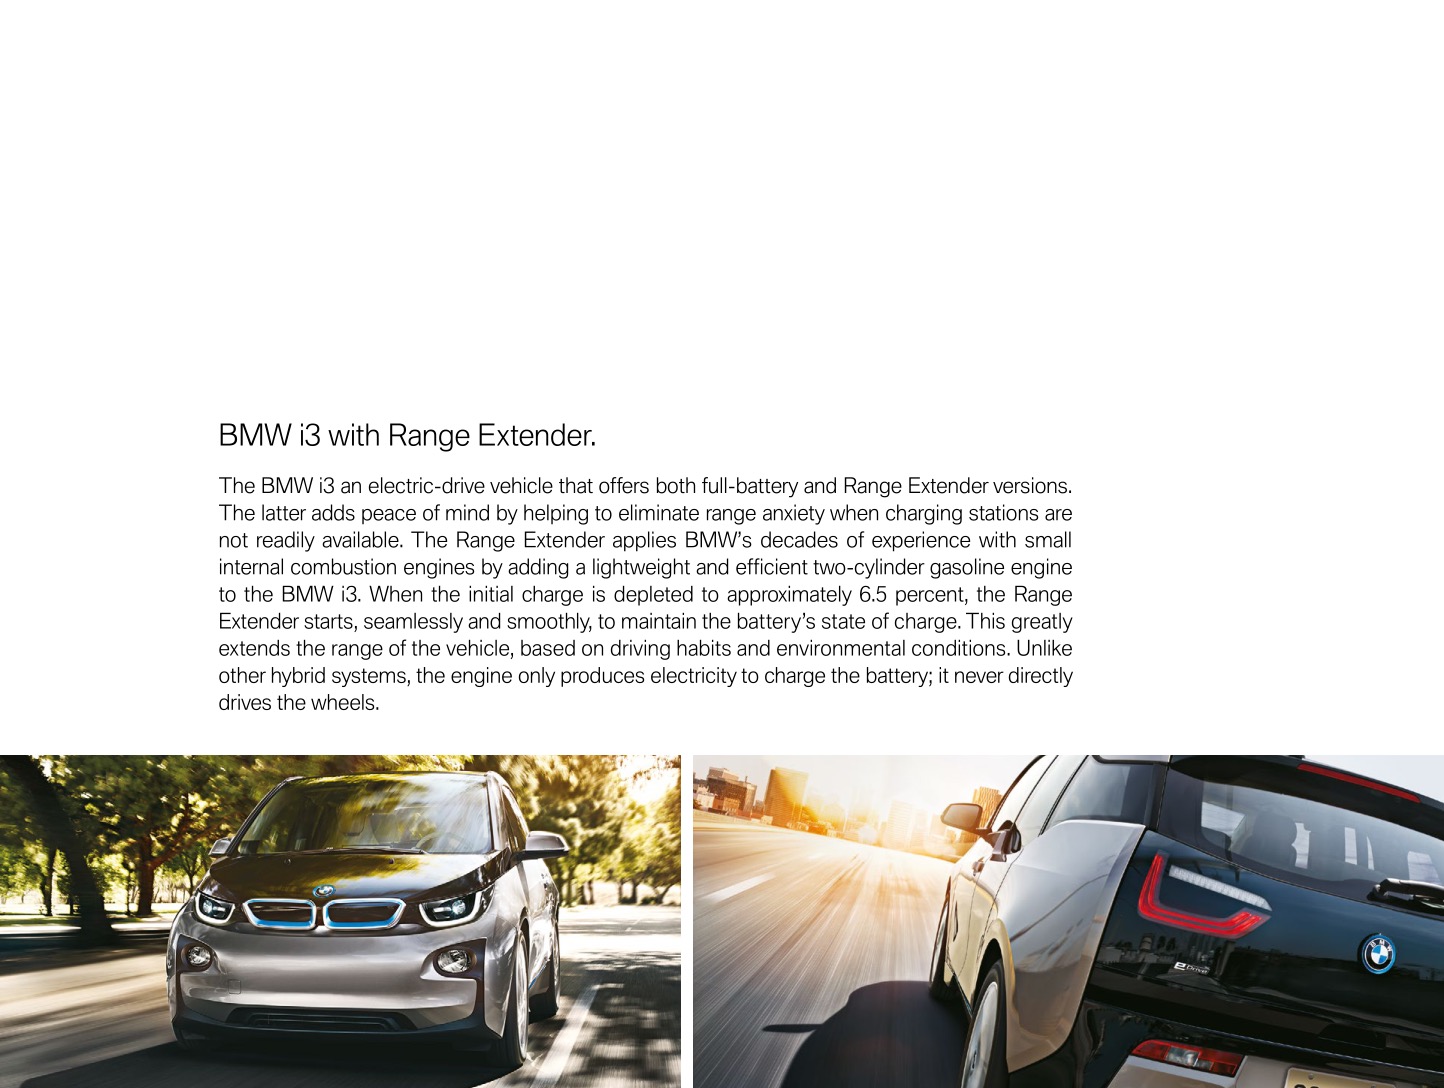 2015 BMW iSeries Brochure Page 1